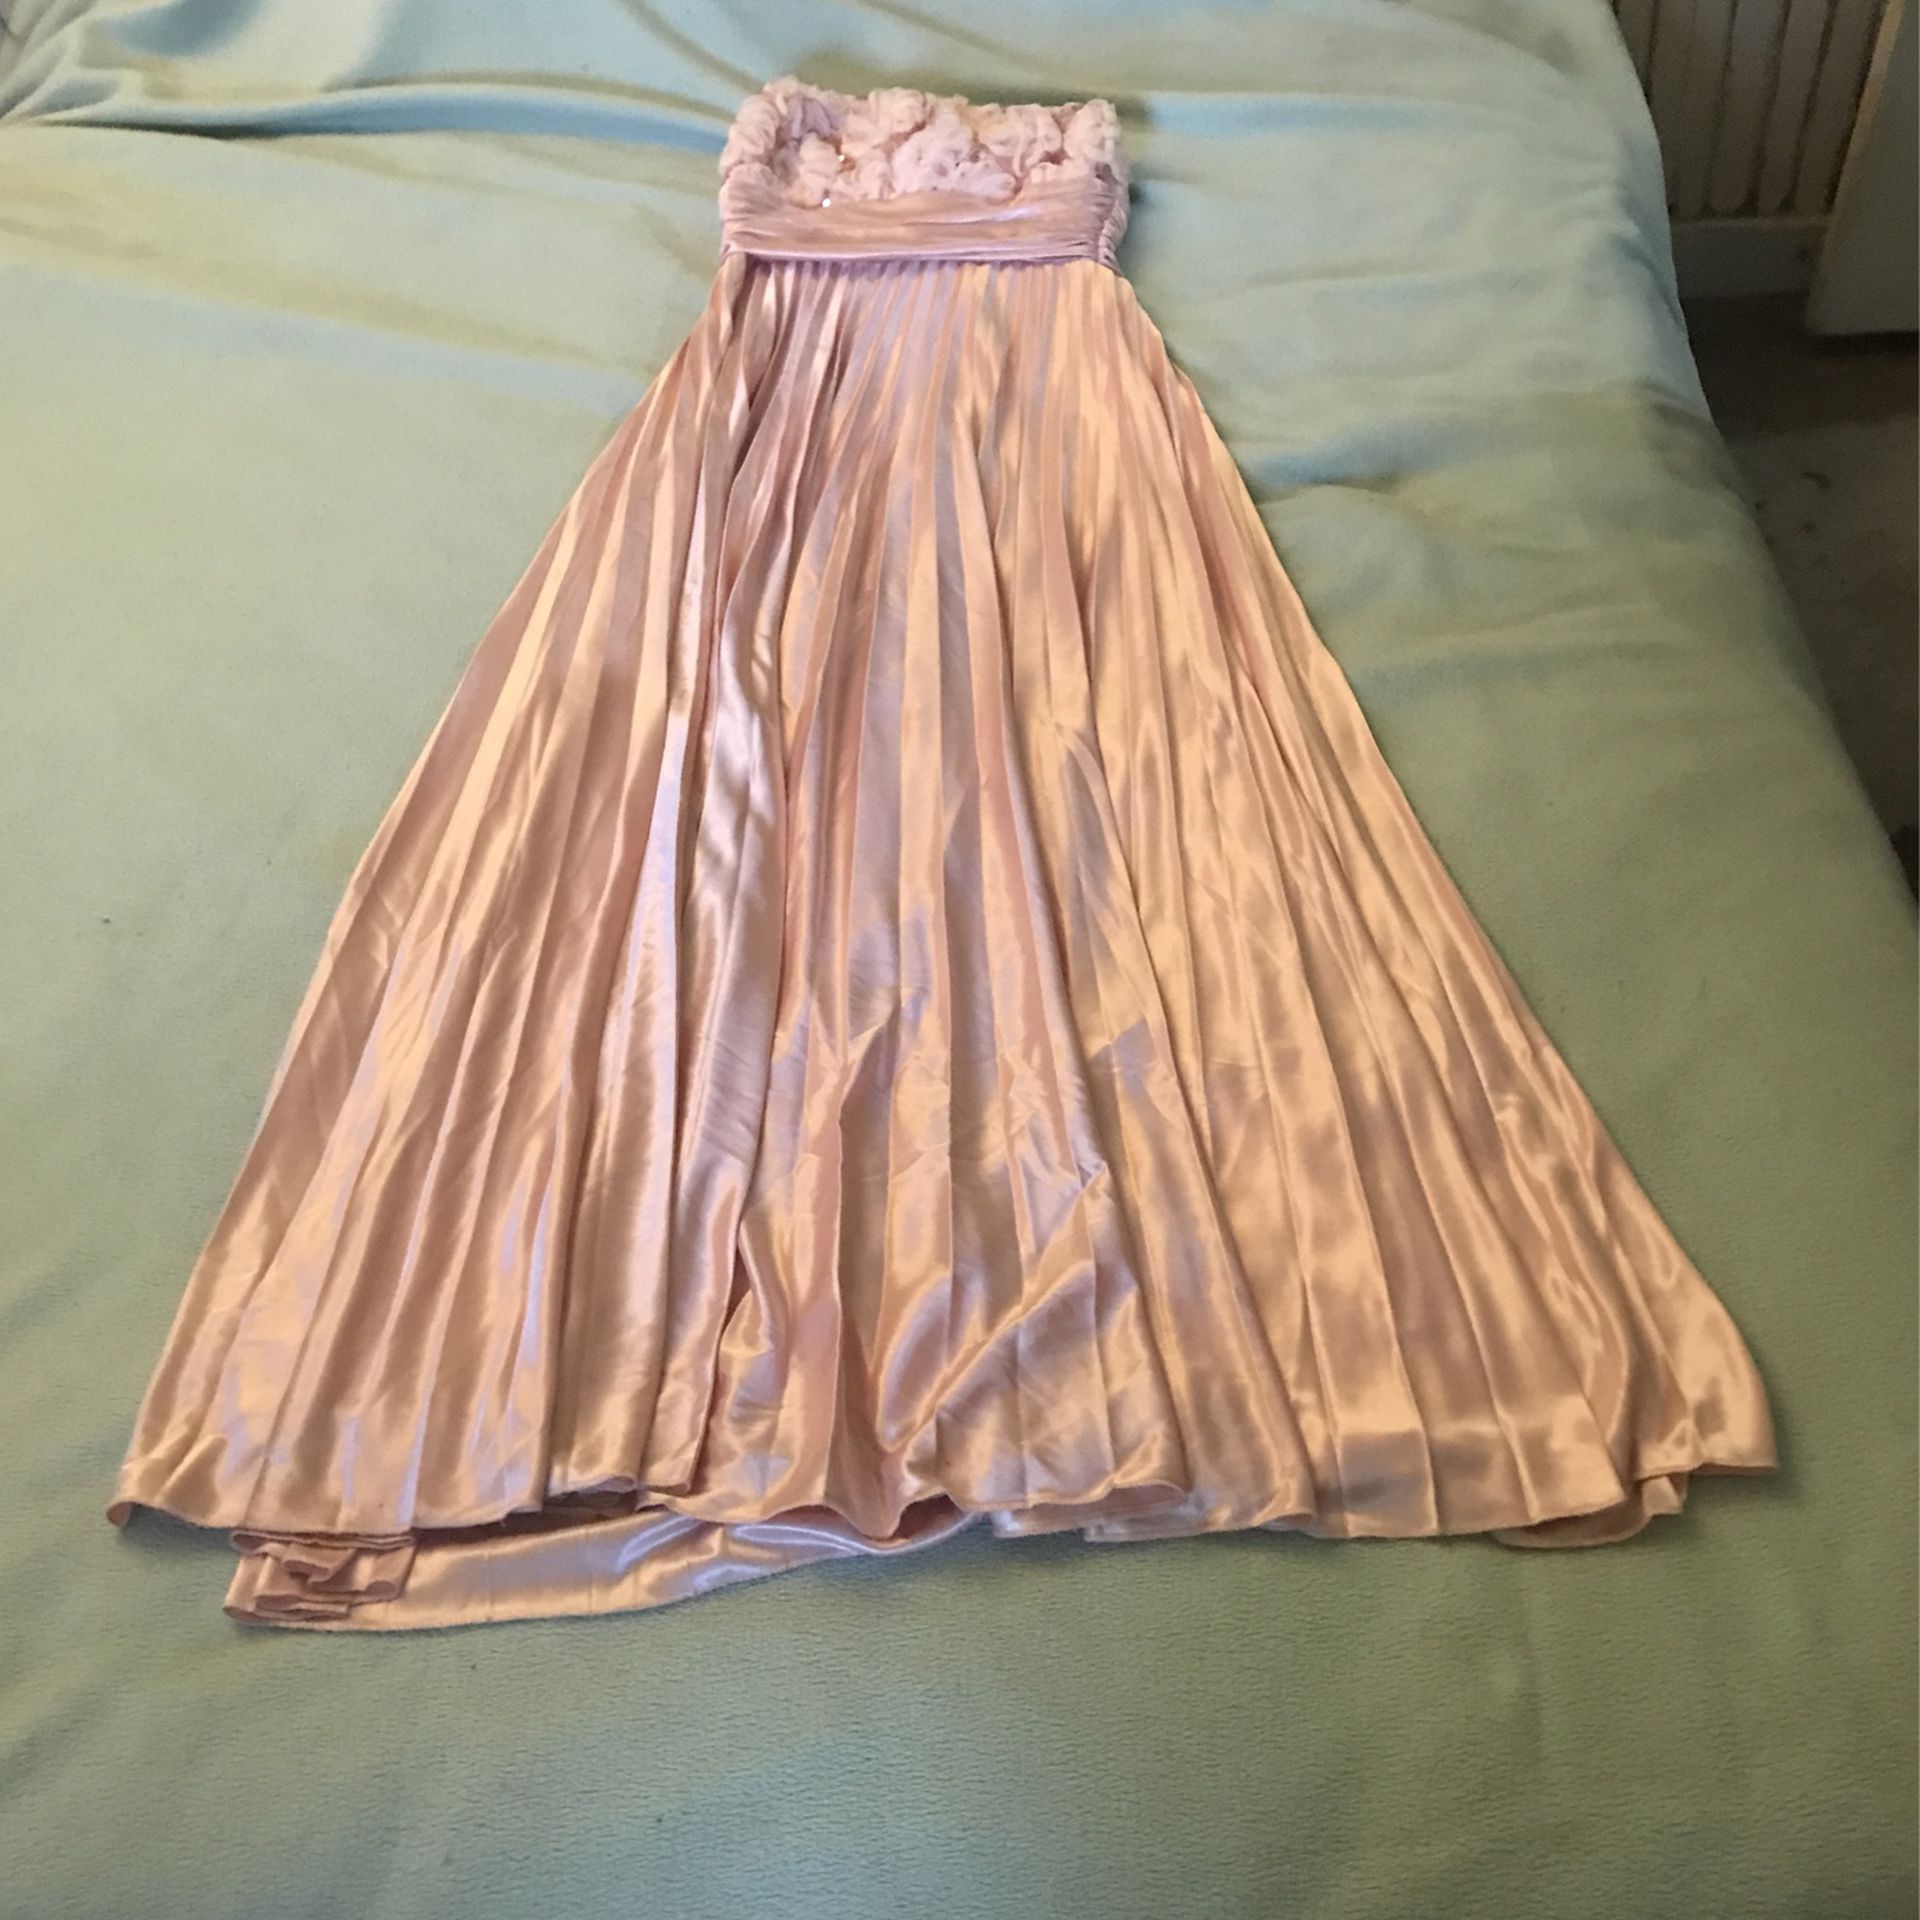 Pink prom dress or formal dress